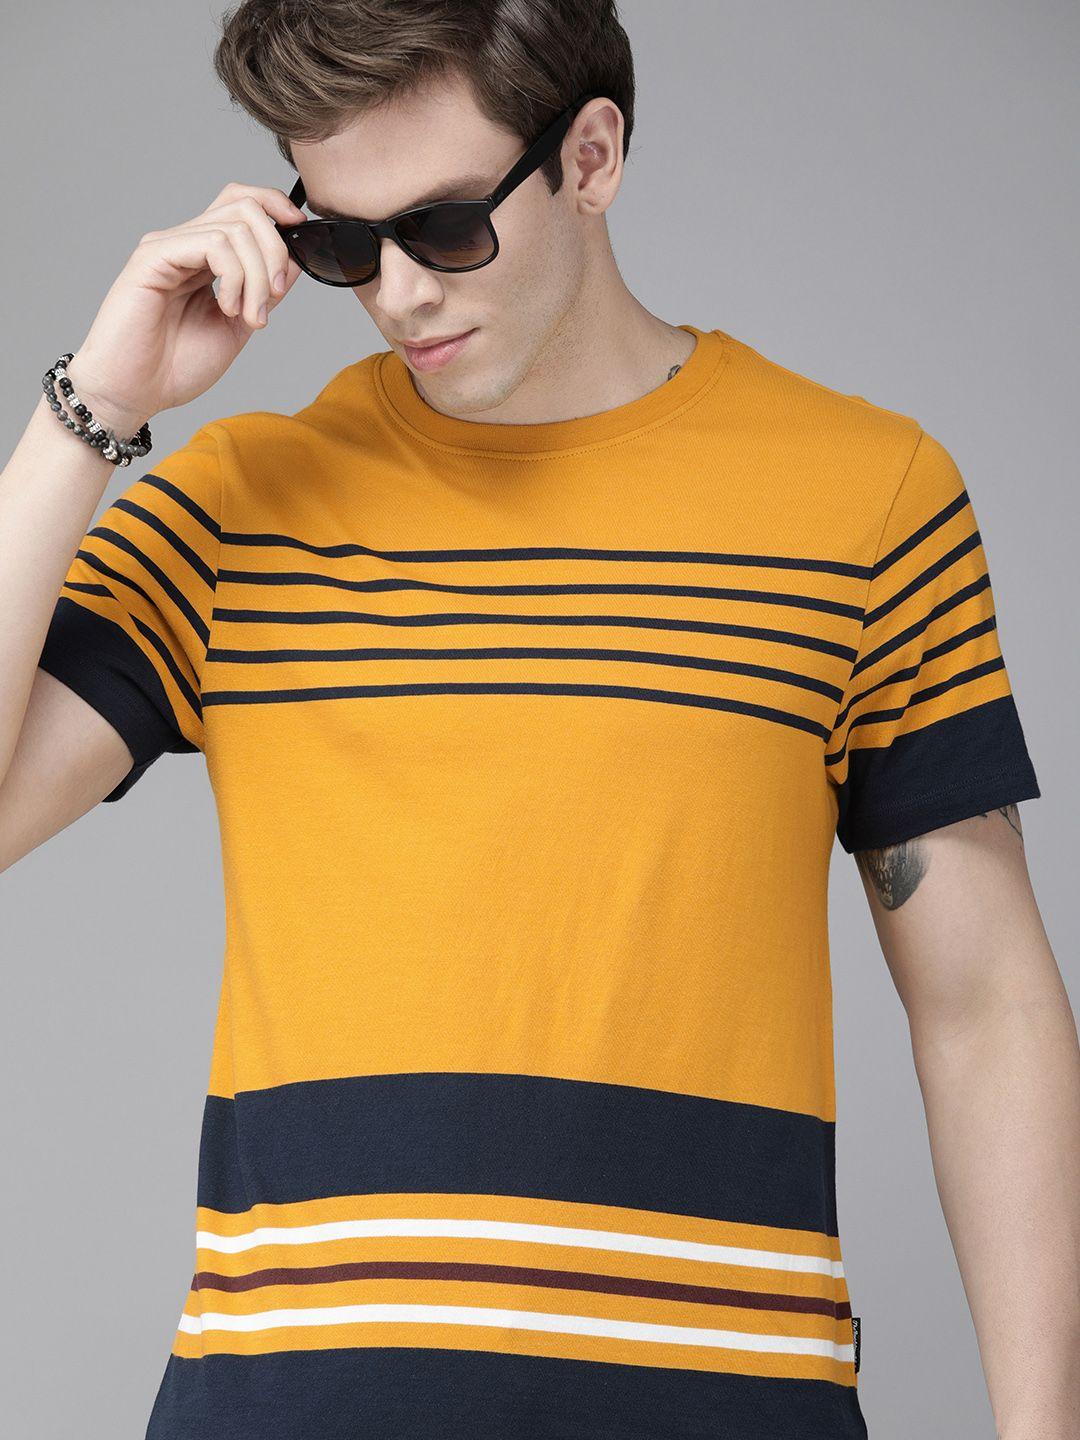 roadster men mustard yellow  navy blue striped round neck pure cotton t-shirt